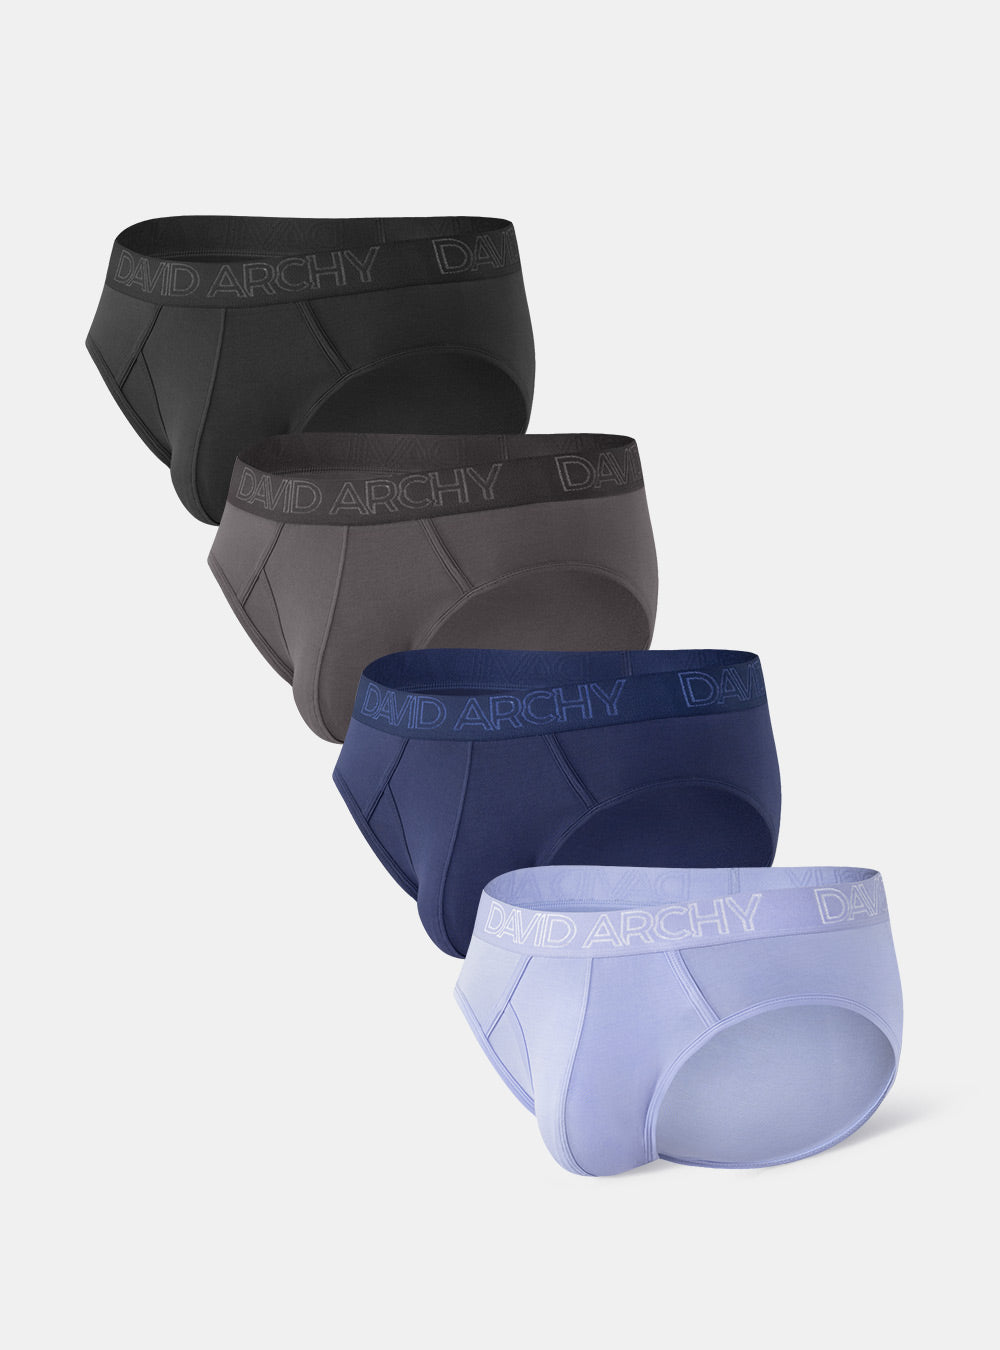 DAVID ARCHY Men's Underwear Ultra Soft Micro Modal Moisture